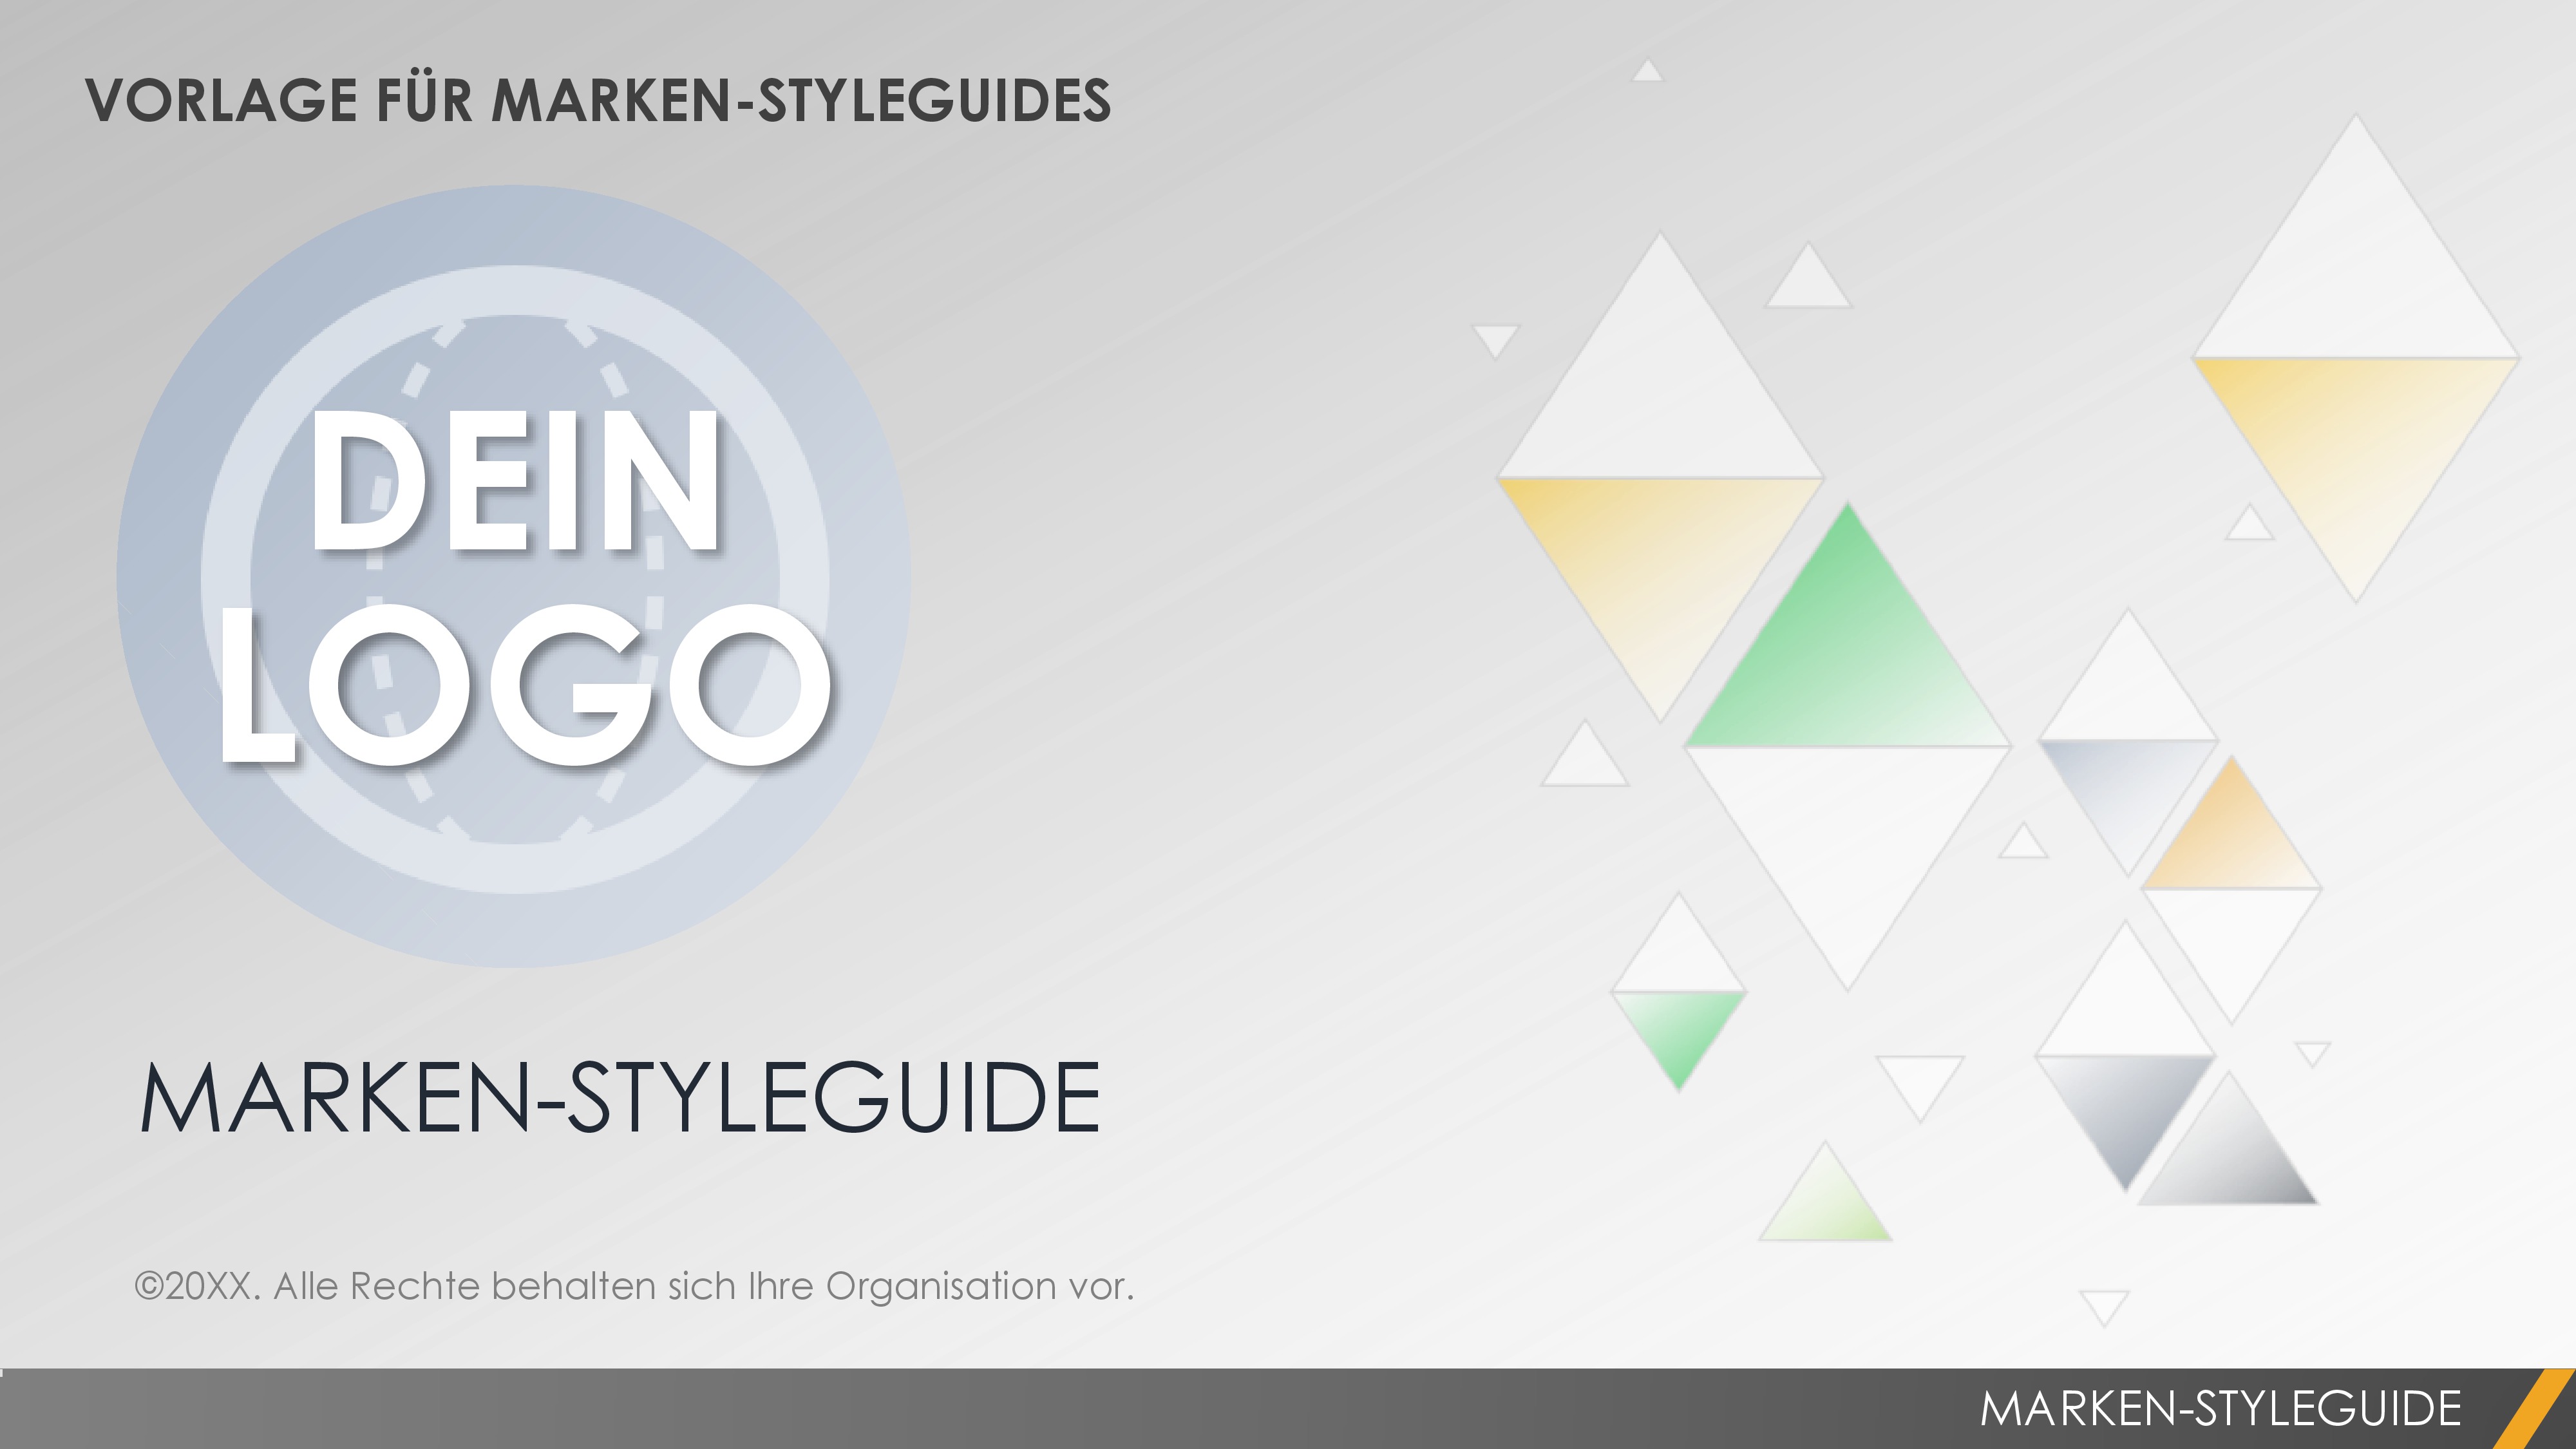 Brand Style Guide Presentation Horizontal 49451 - DE